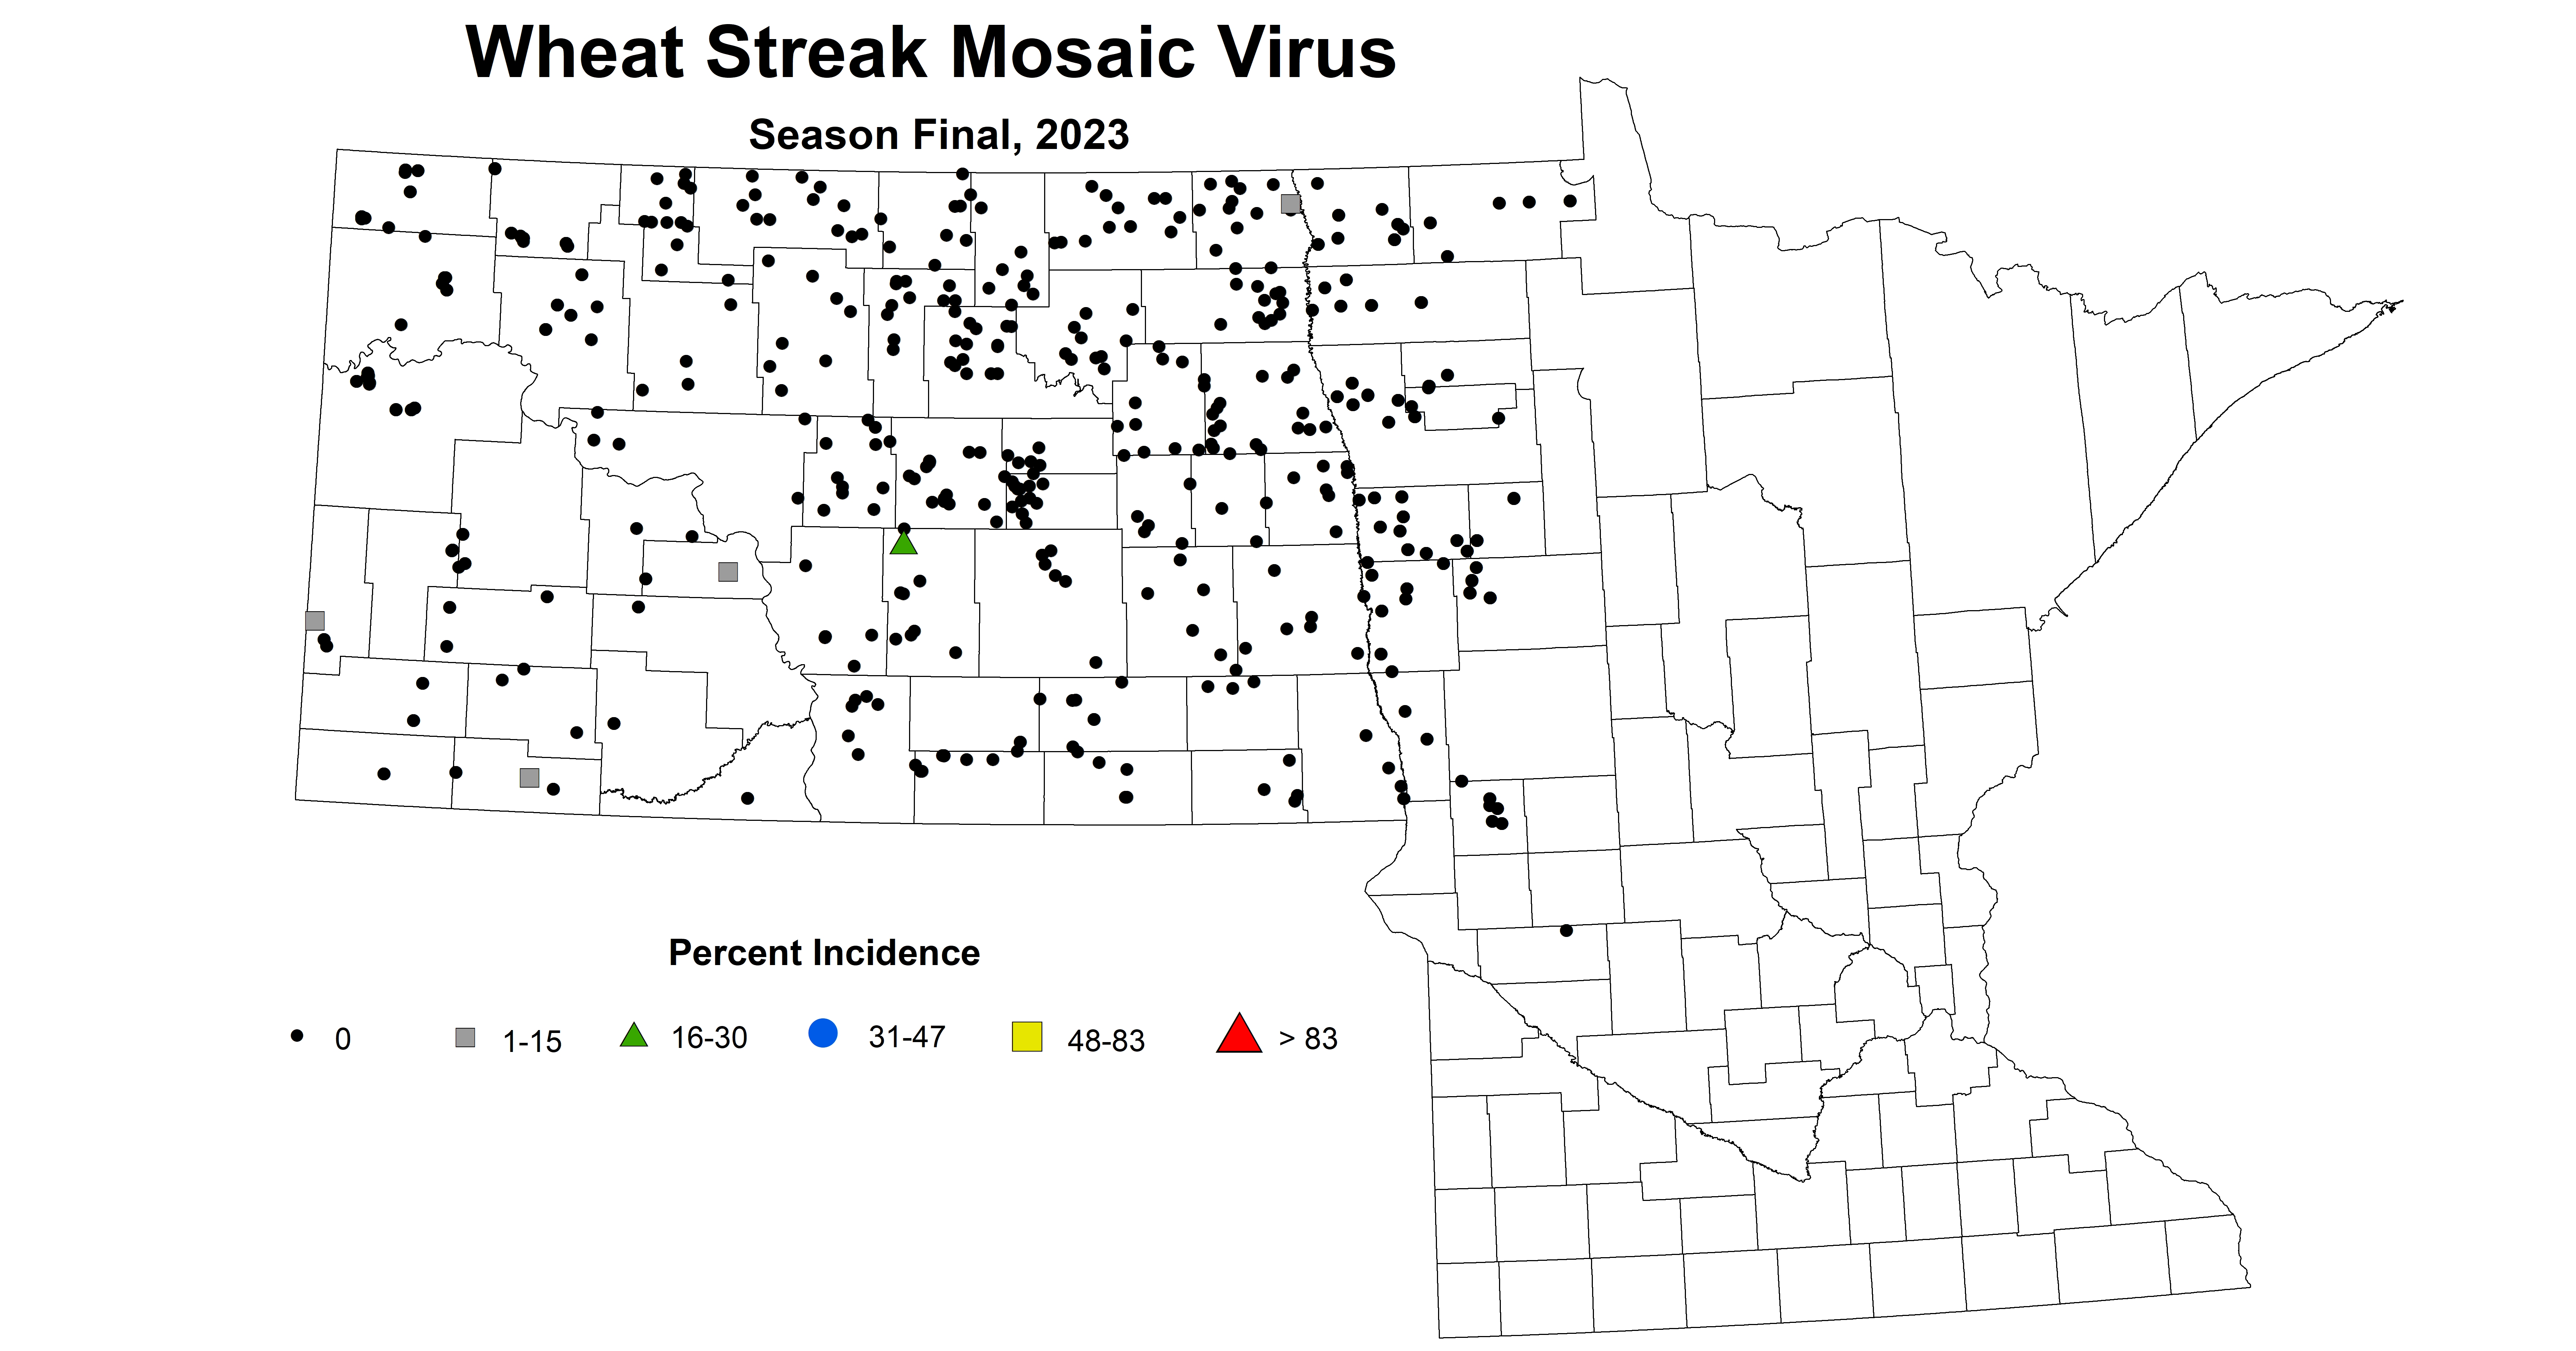 wheat streak mosaic virus season final 2023